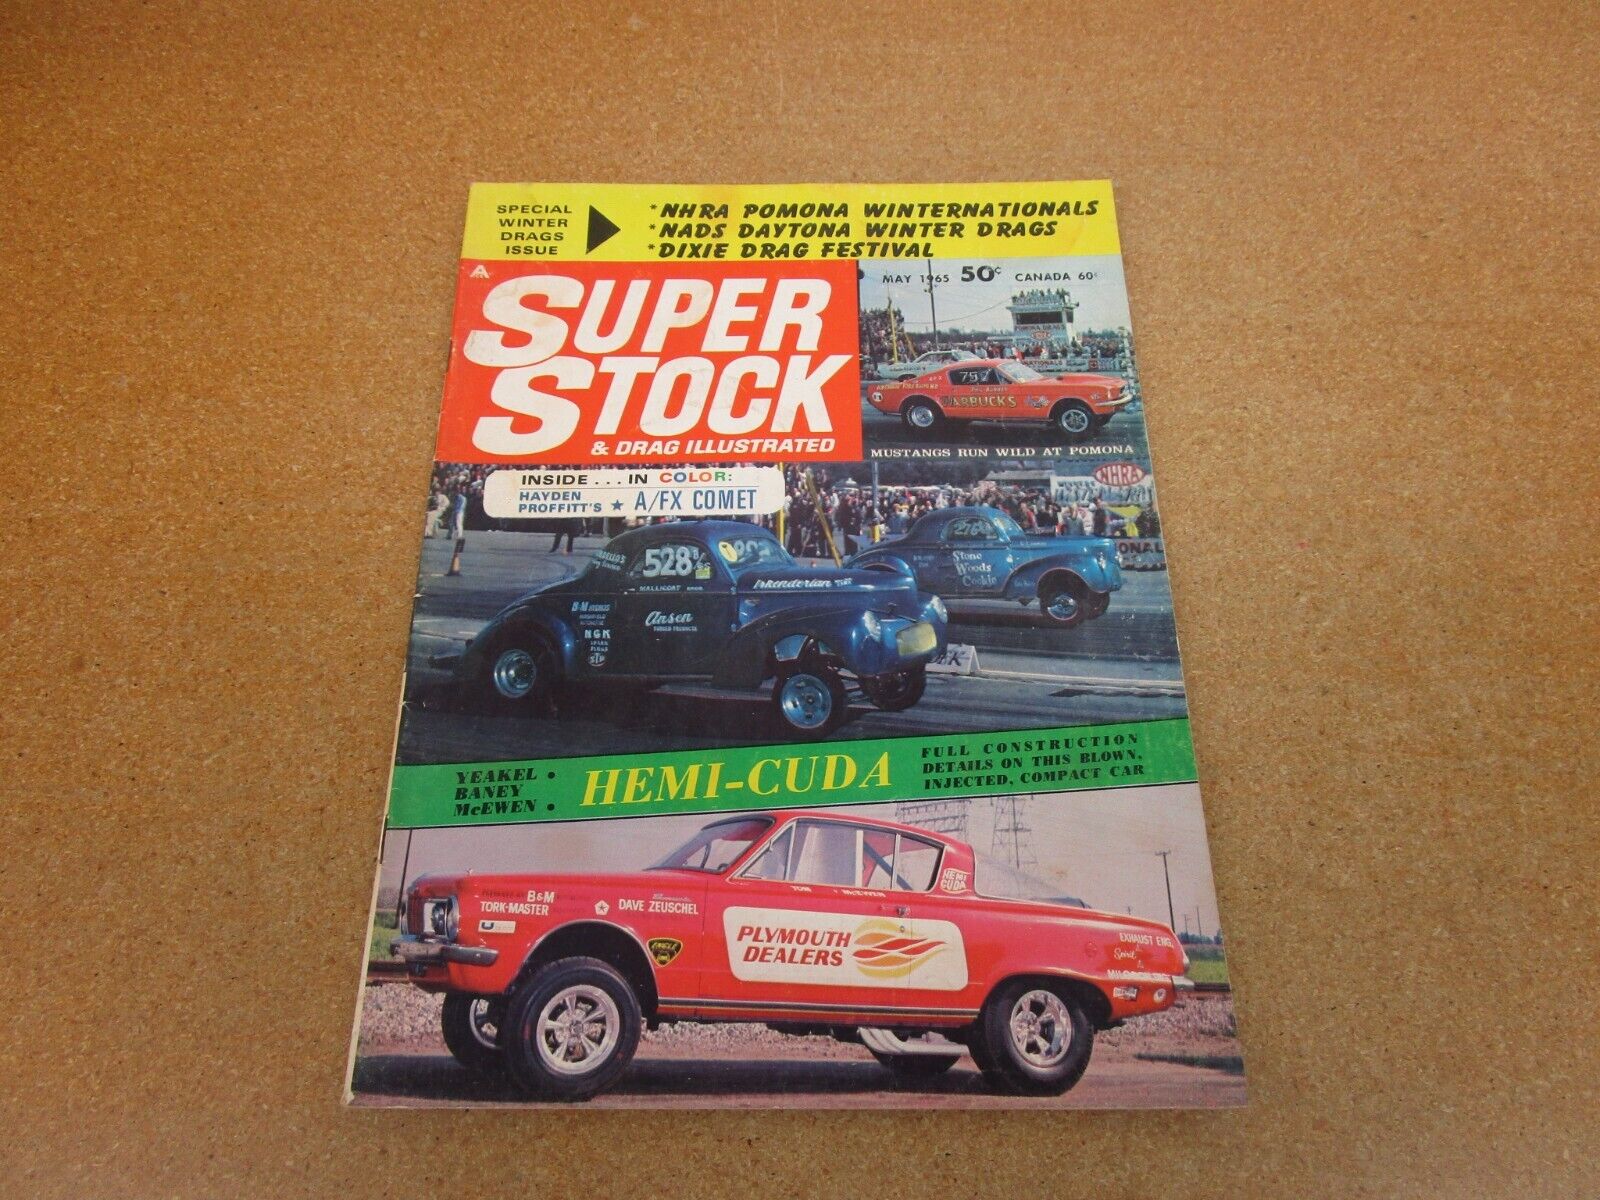 SUPER STOCK & DRAG ILL magazine May 1965 Hemi Cuda Dodge Ford Mustang racing